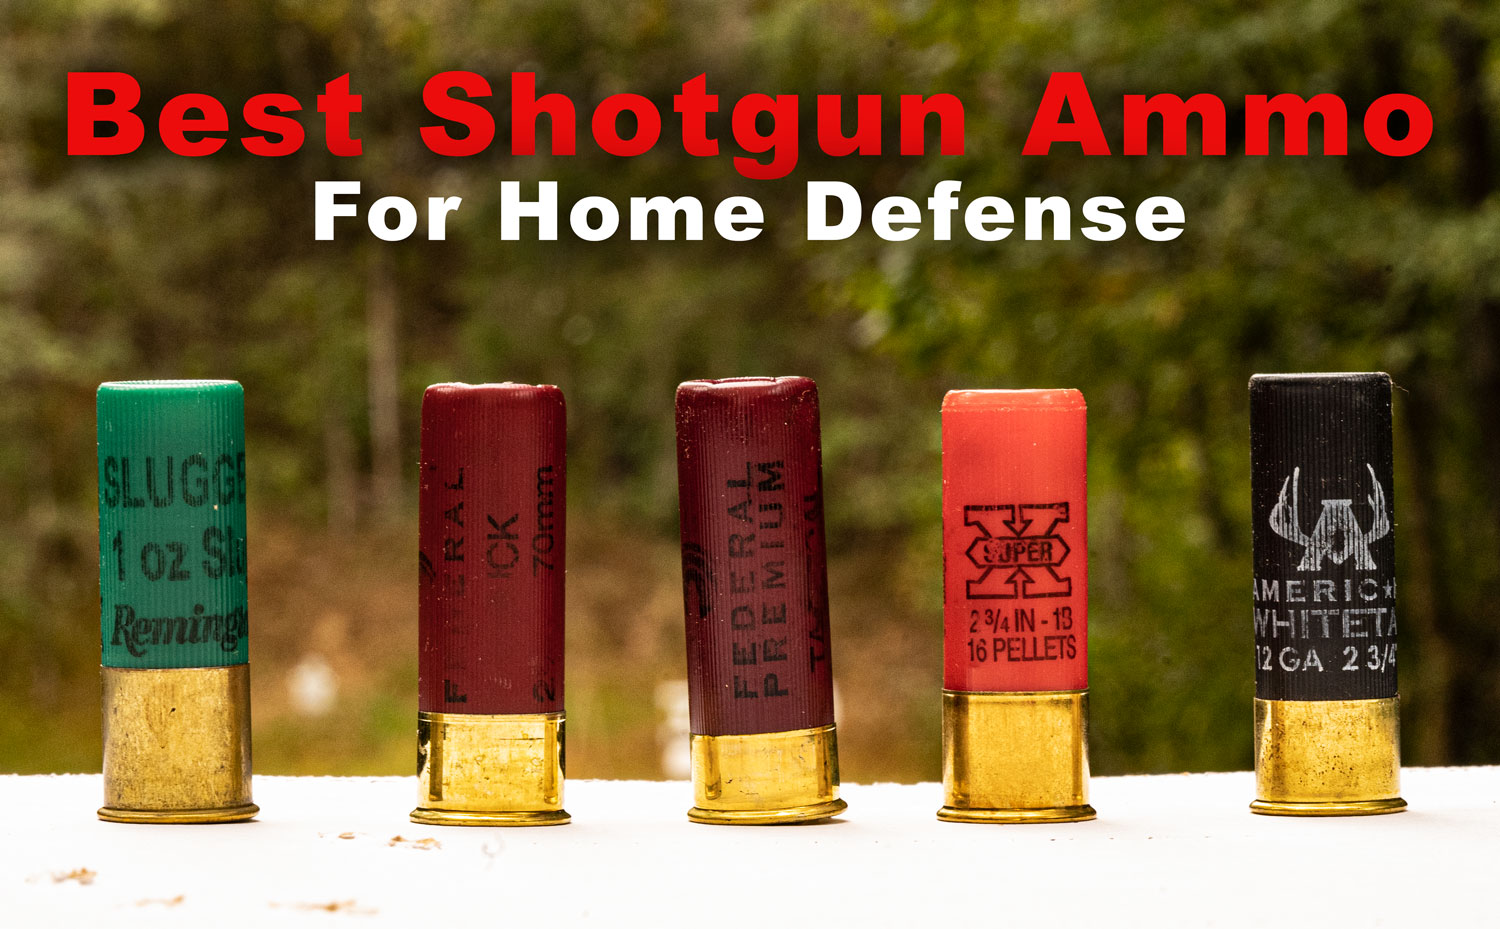 Best shotgun ammo for home defense choices